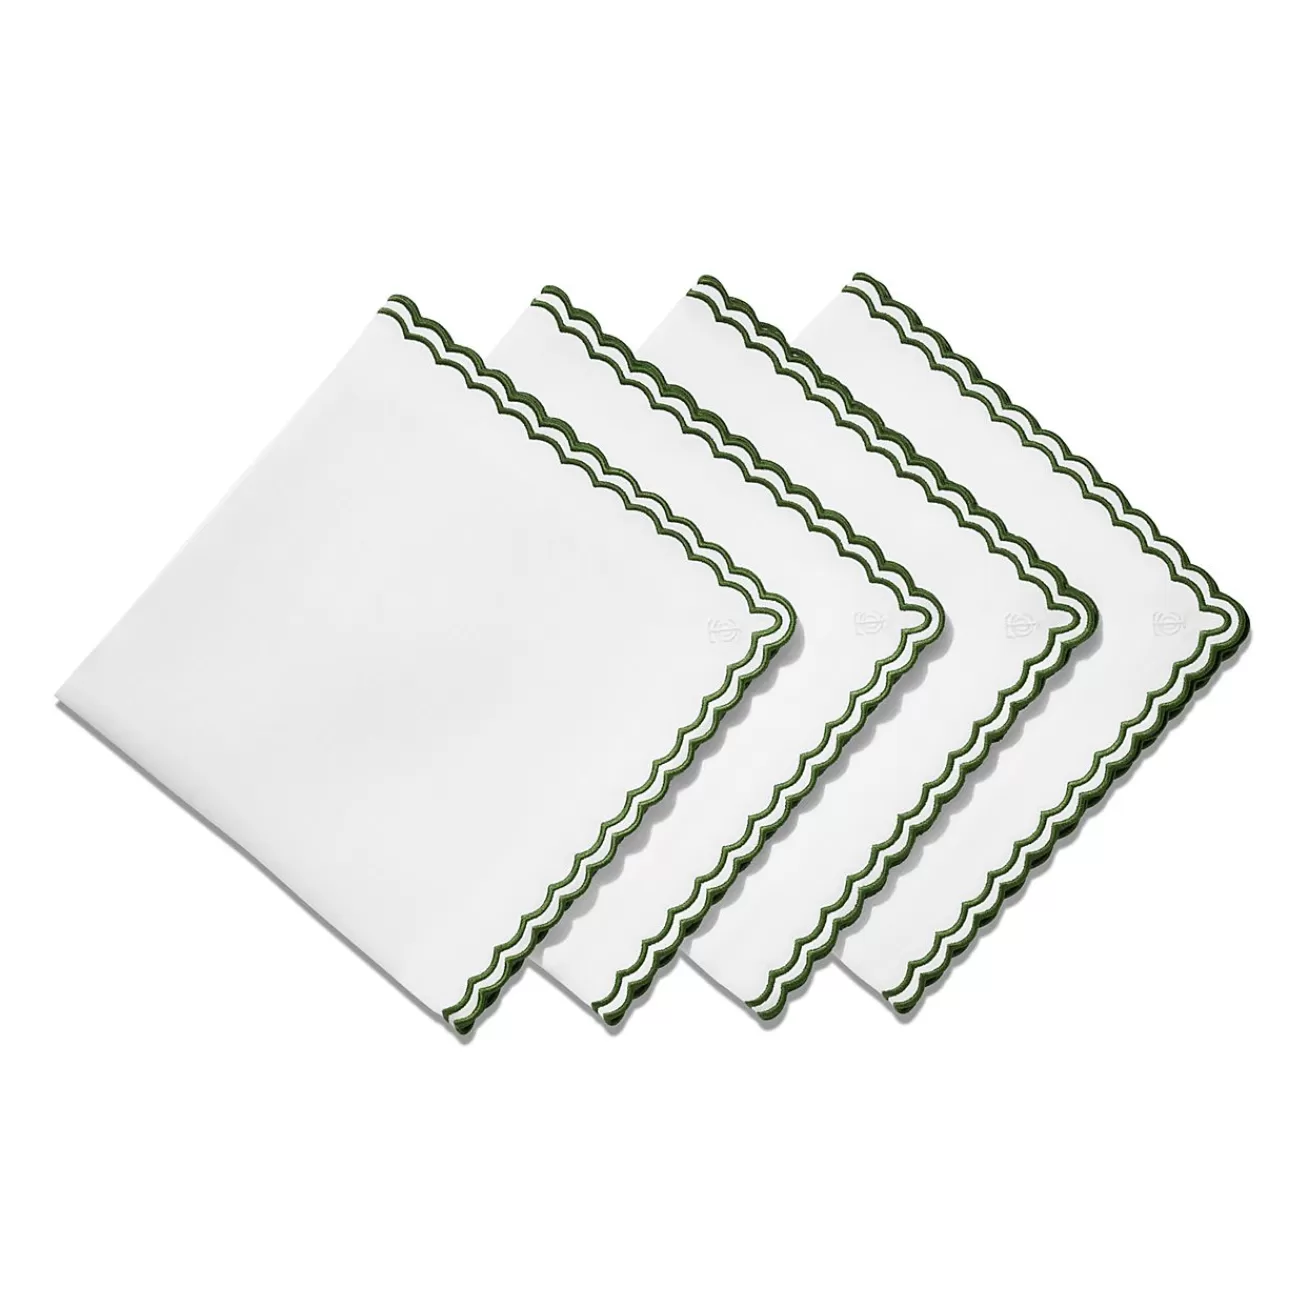 Tiffany & Co. Tiffany Home Essentials Scalloped Napkins in White Linen, Set of Four | ^ Decor | Table Linens